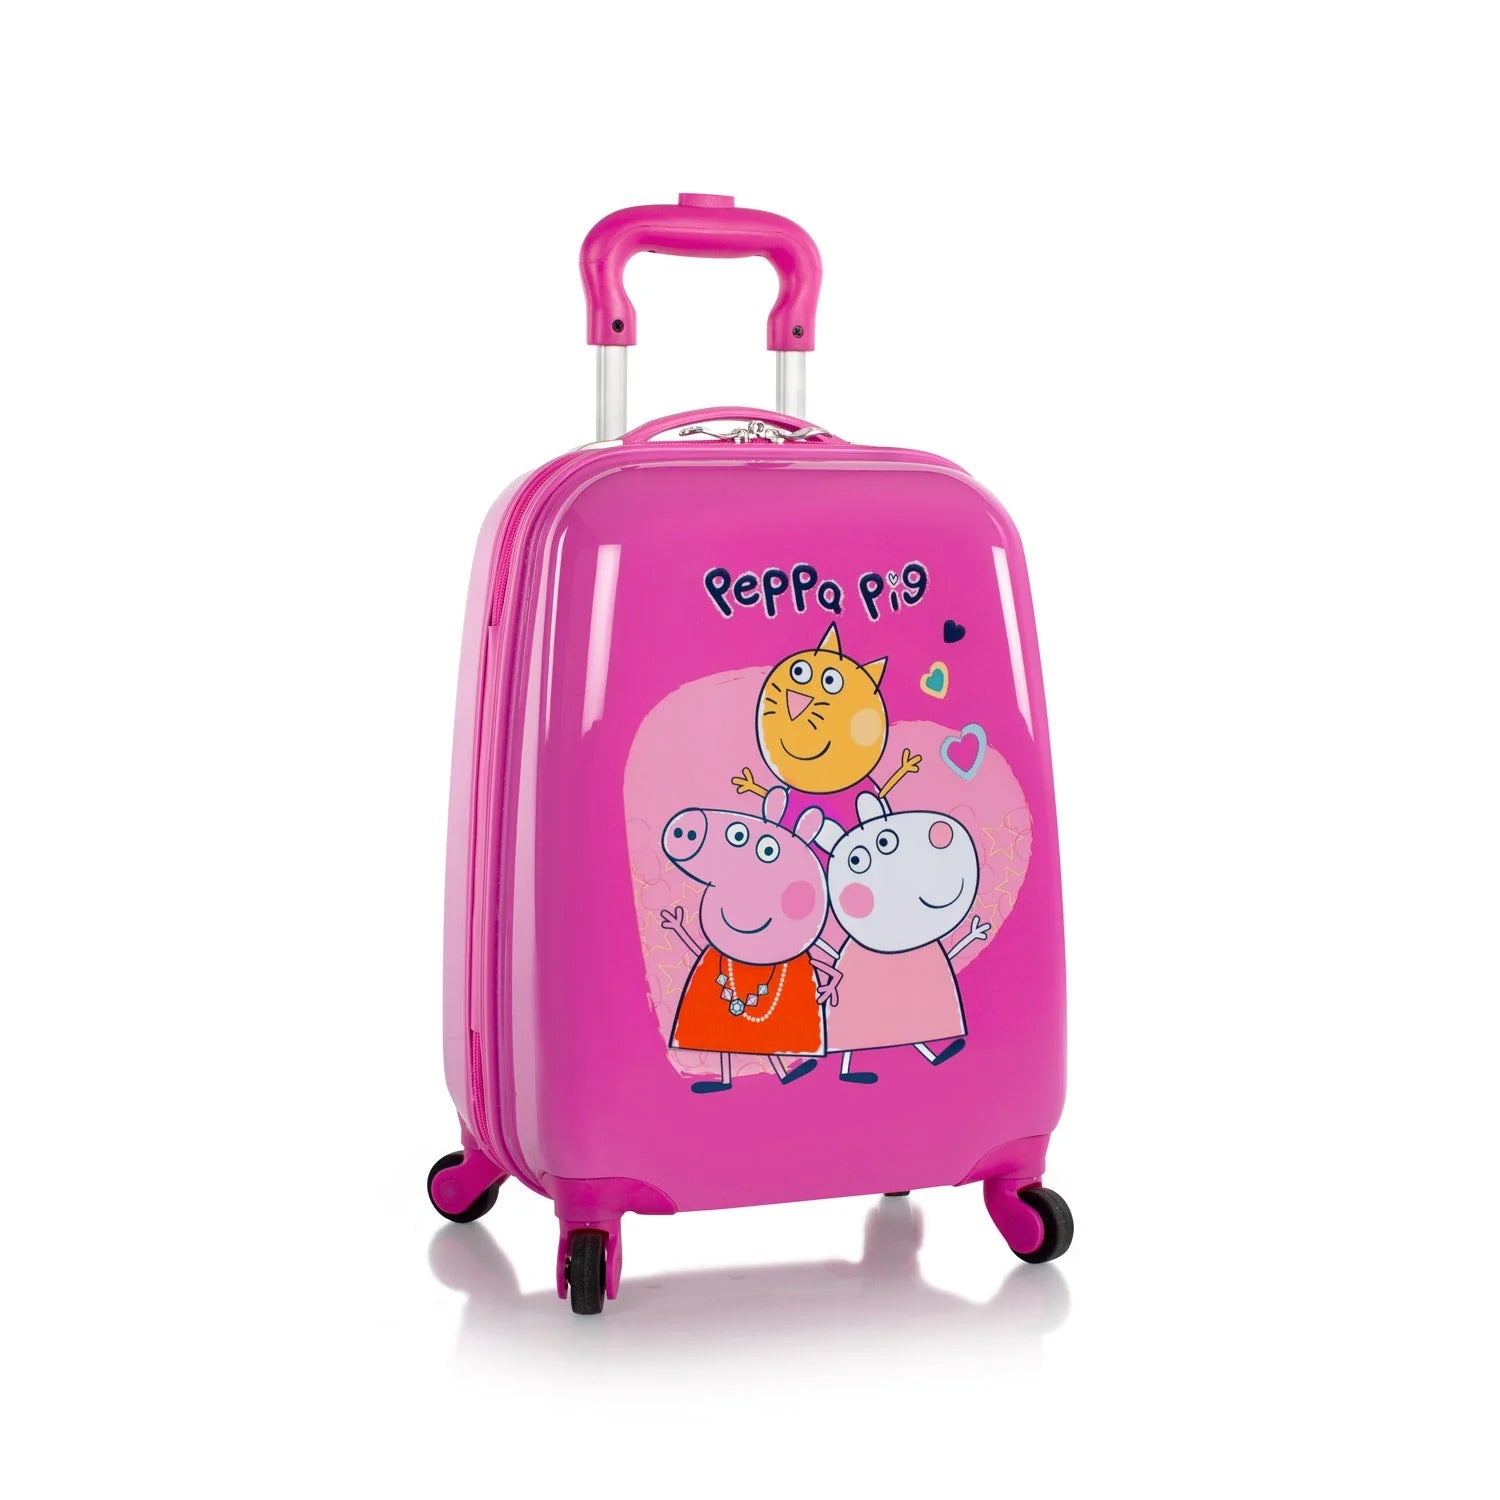 Peppa Kids Kids Spinner Luggage - Four Wheels - Hardcase - Polycarbonate